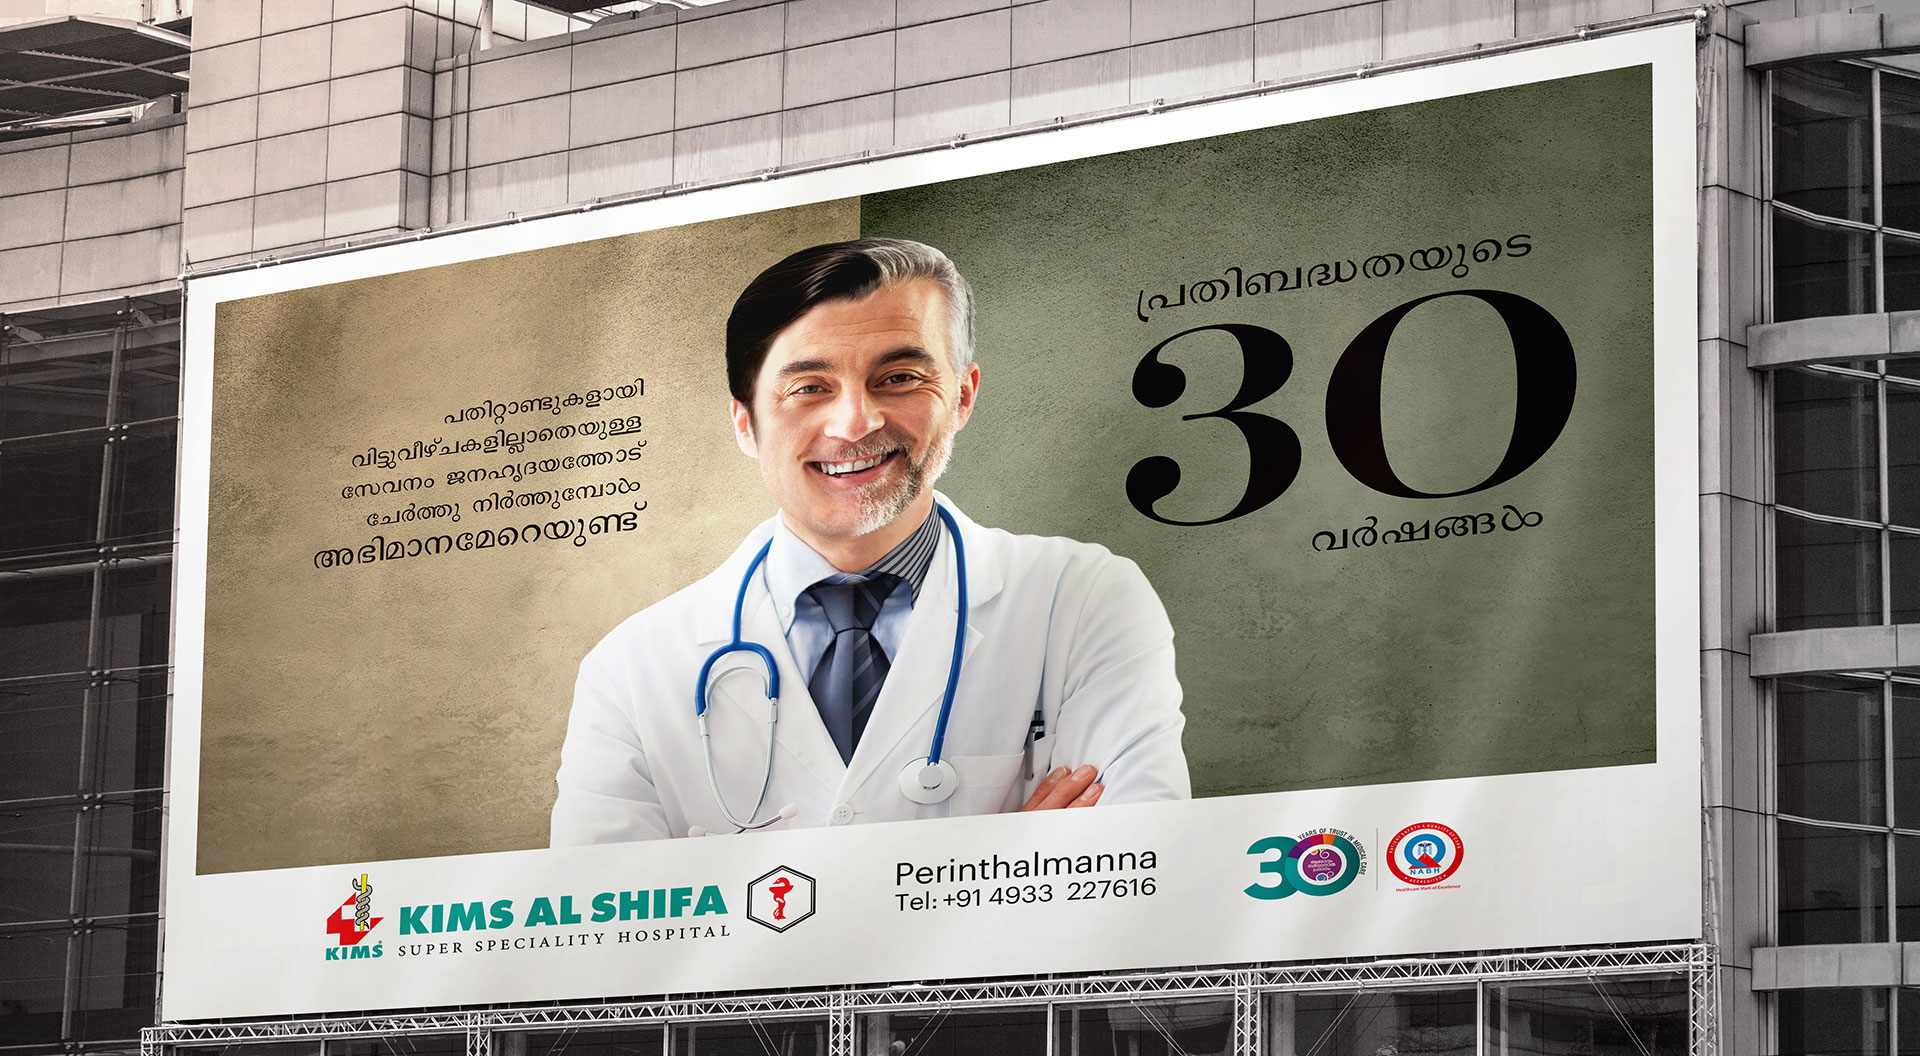 KIMS Al Shifa - 30 years of Responsibility Print ad on Hoarding